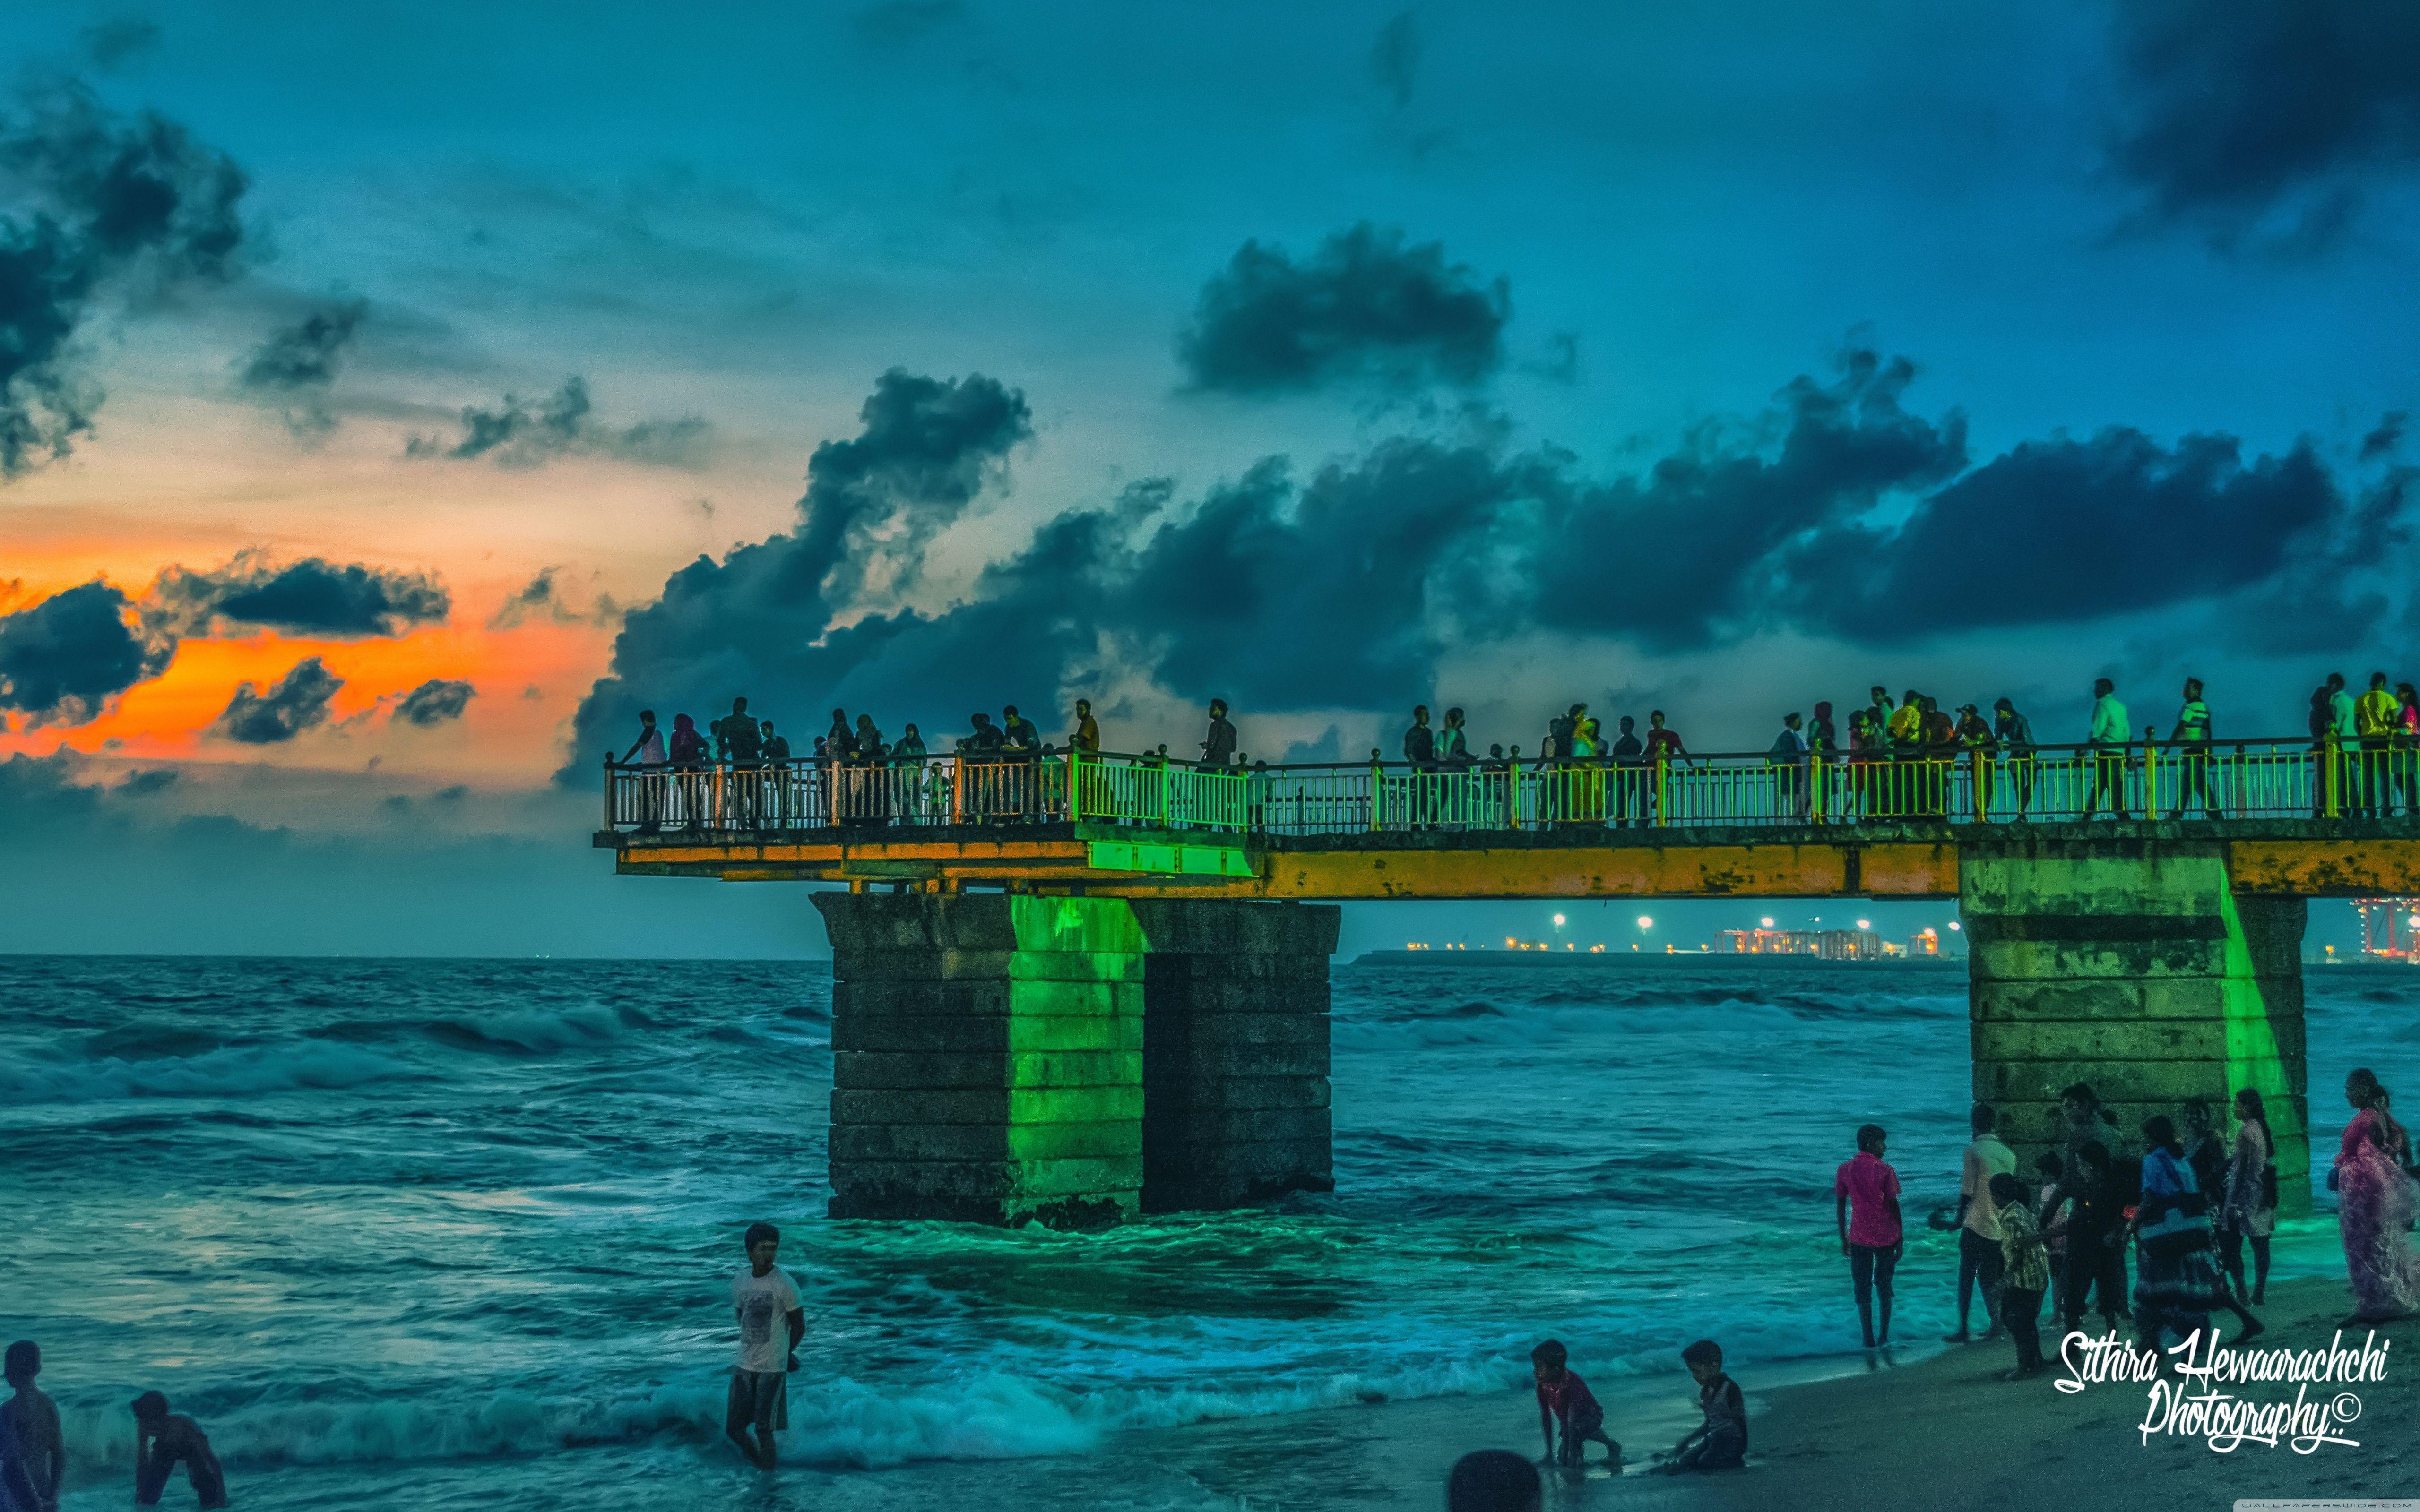 Sri Lanka Photos, Download The BEST Free Sri Lanka Stock Photos & HD Images